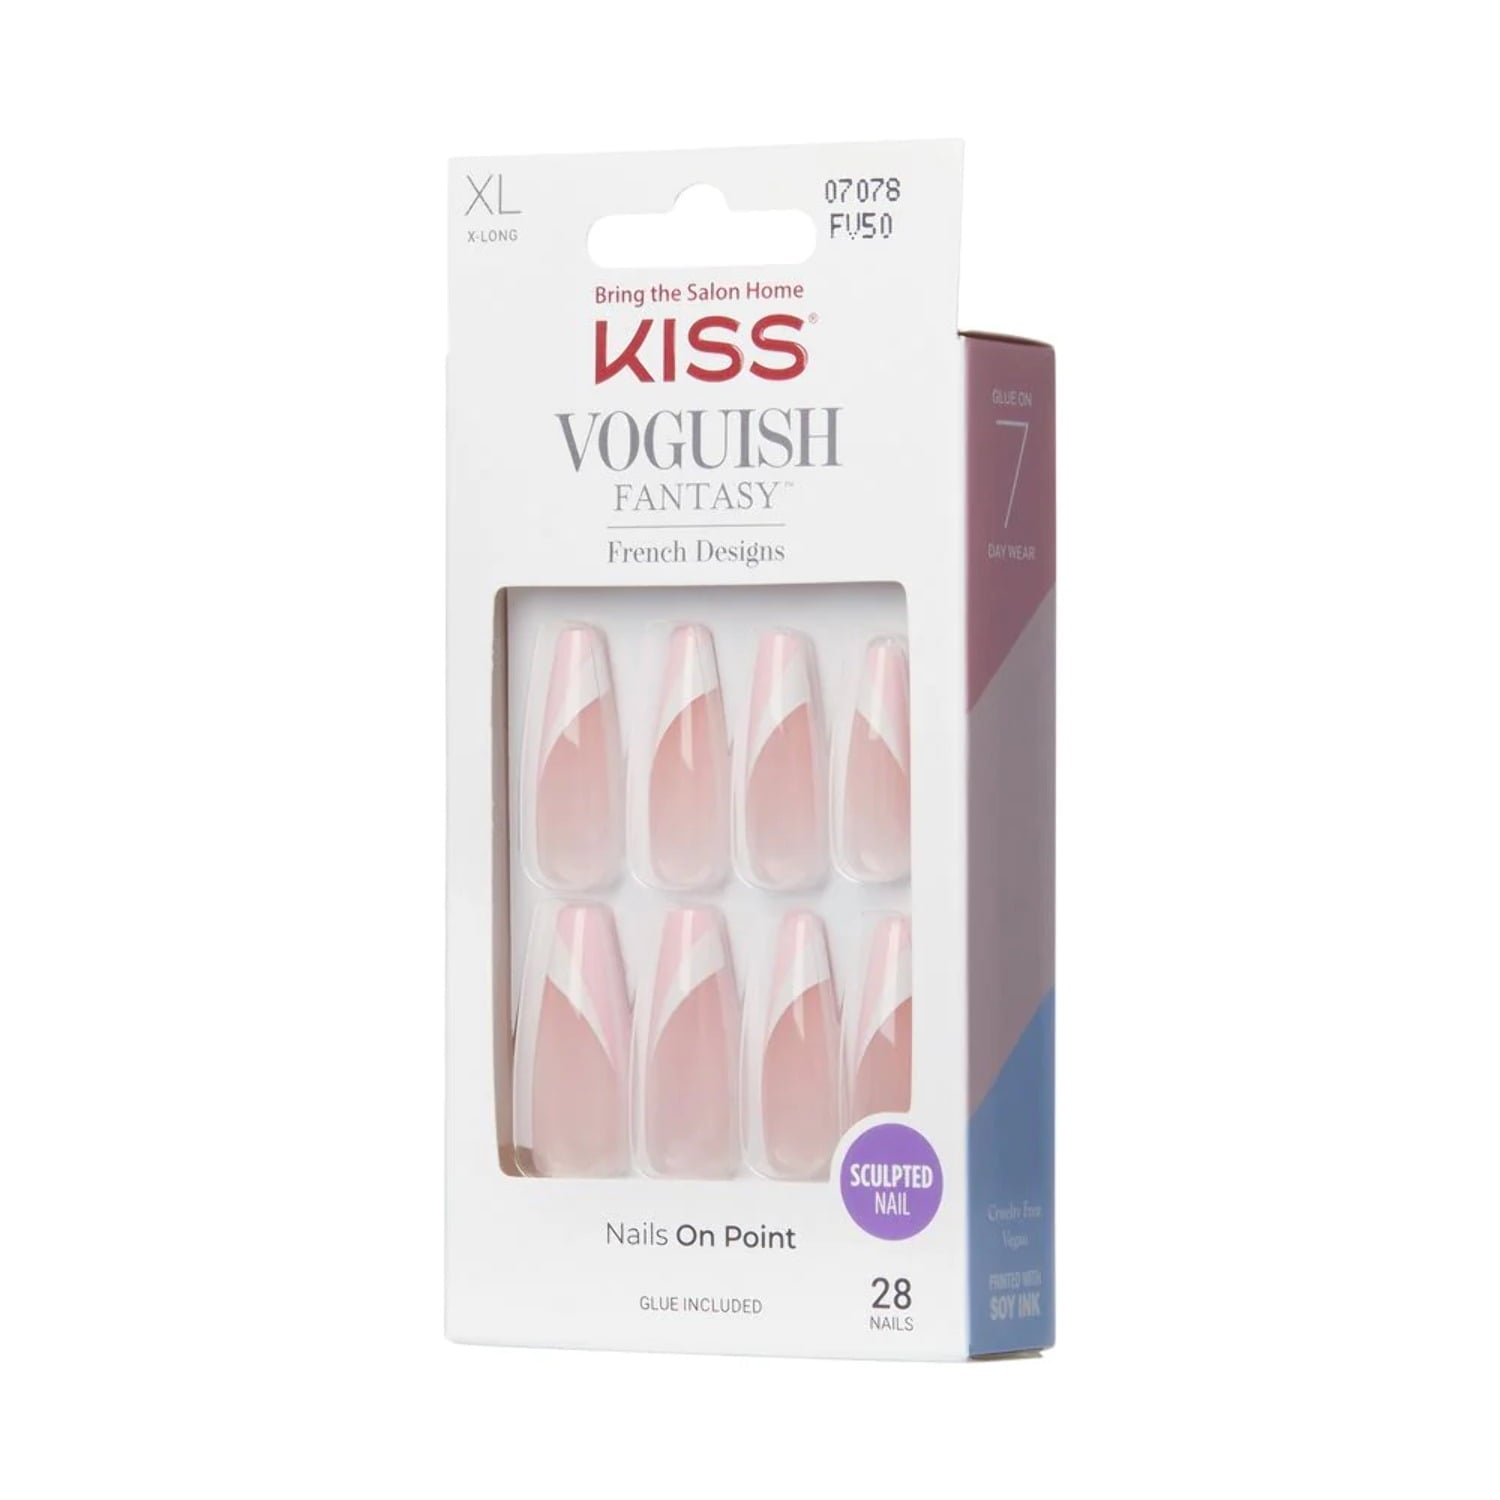 Kiss Voguish Fantasy French - Las Vegas (FV50)